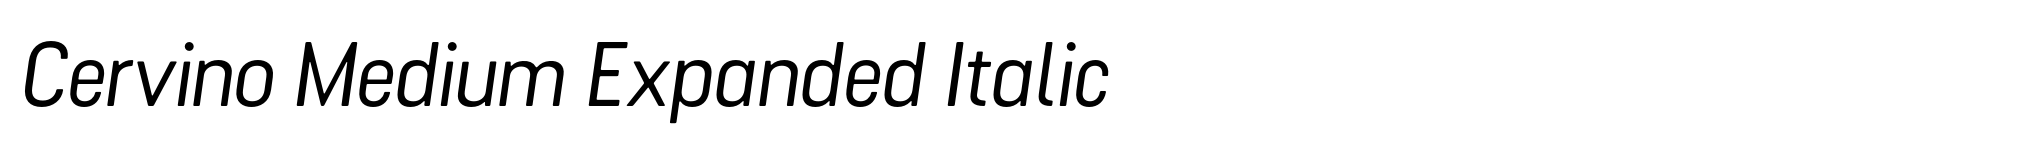 Cervino Medium Expanded Italic image